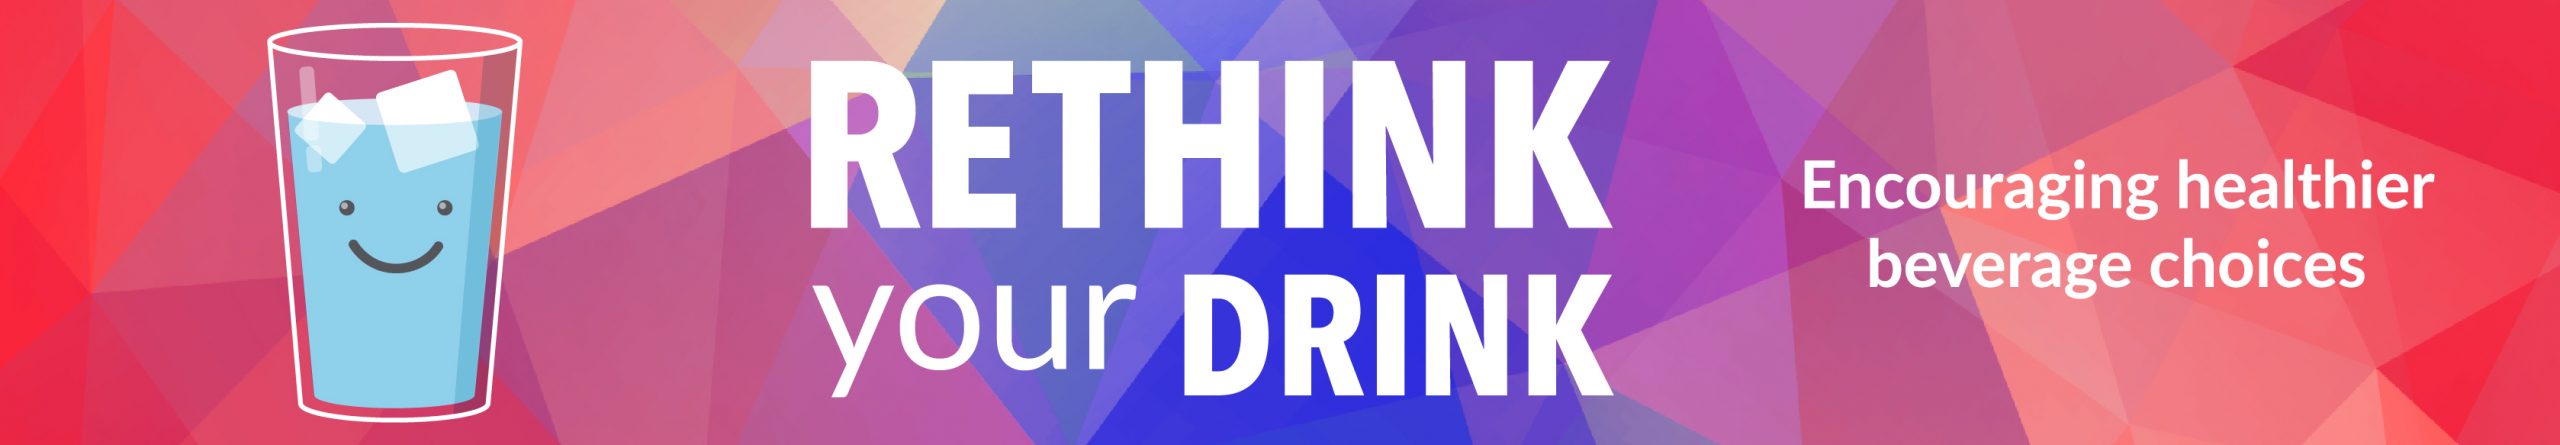 Rethink Your Drink Banner Image